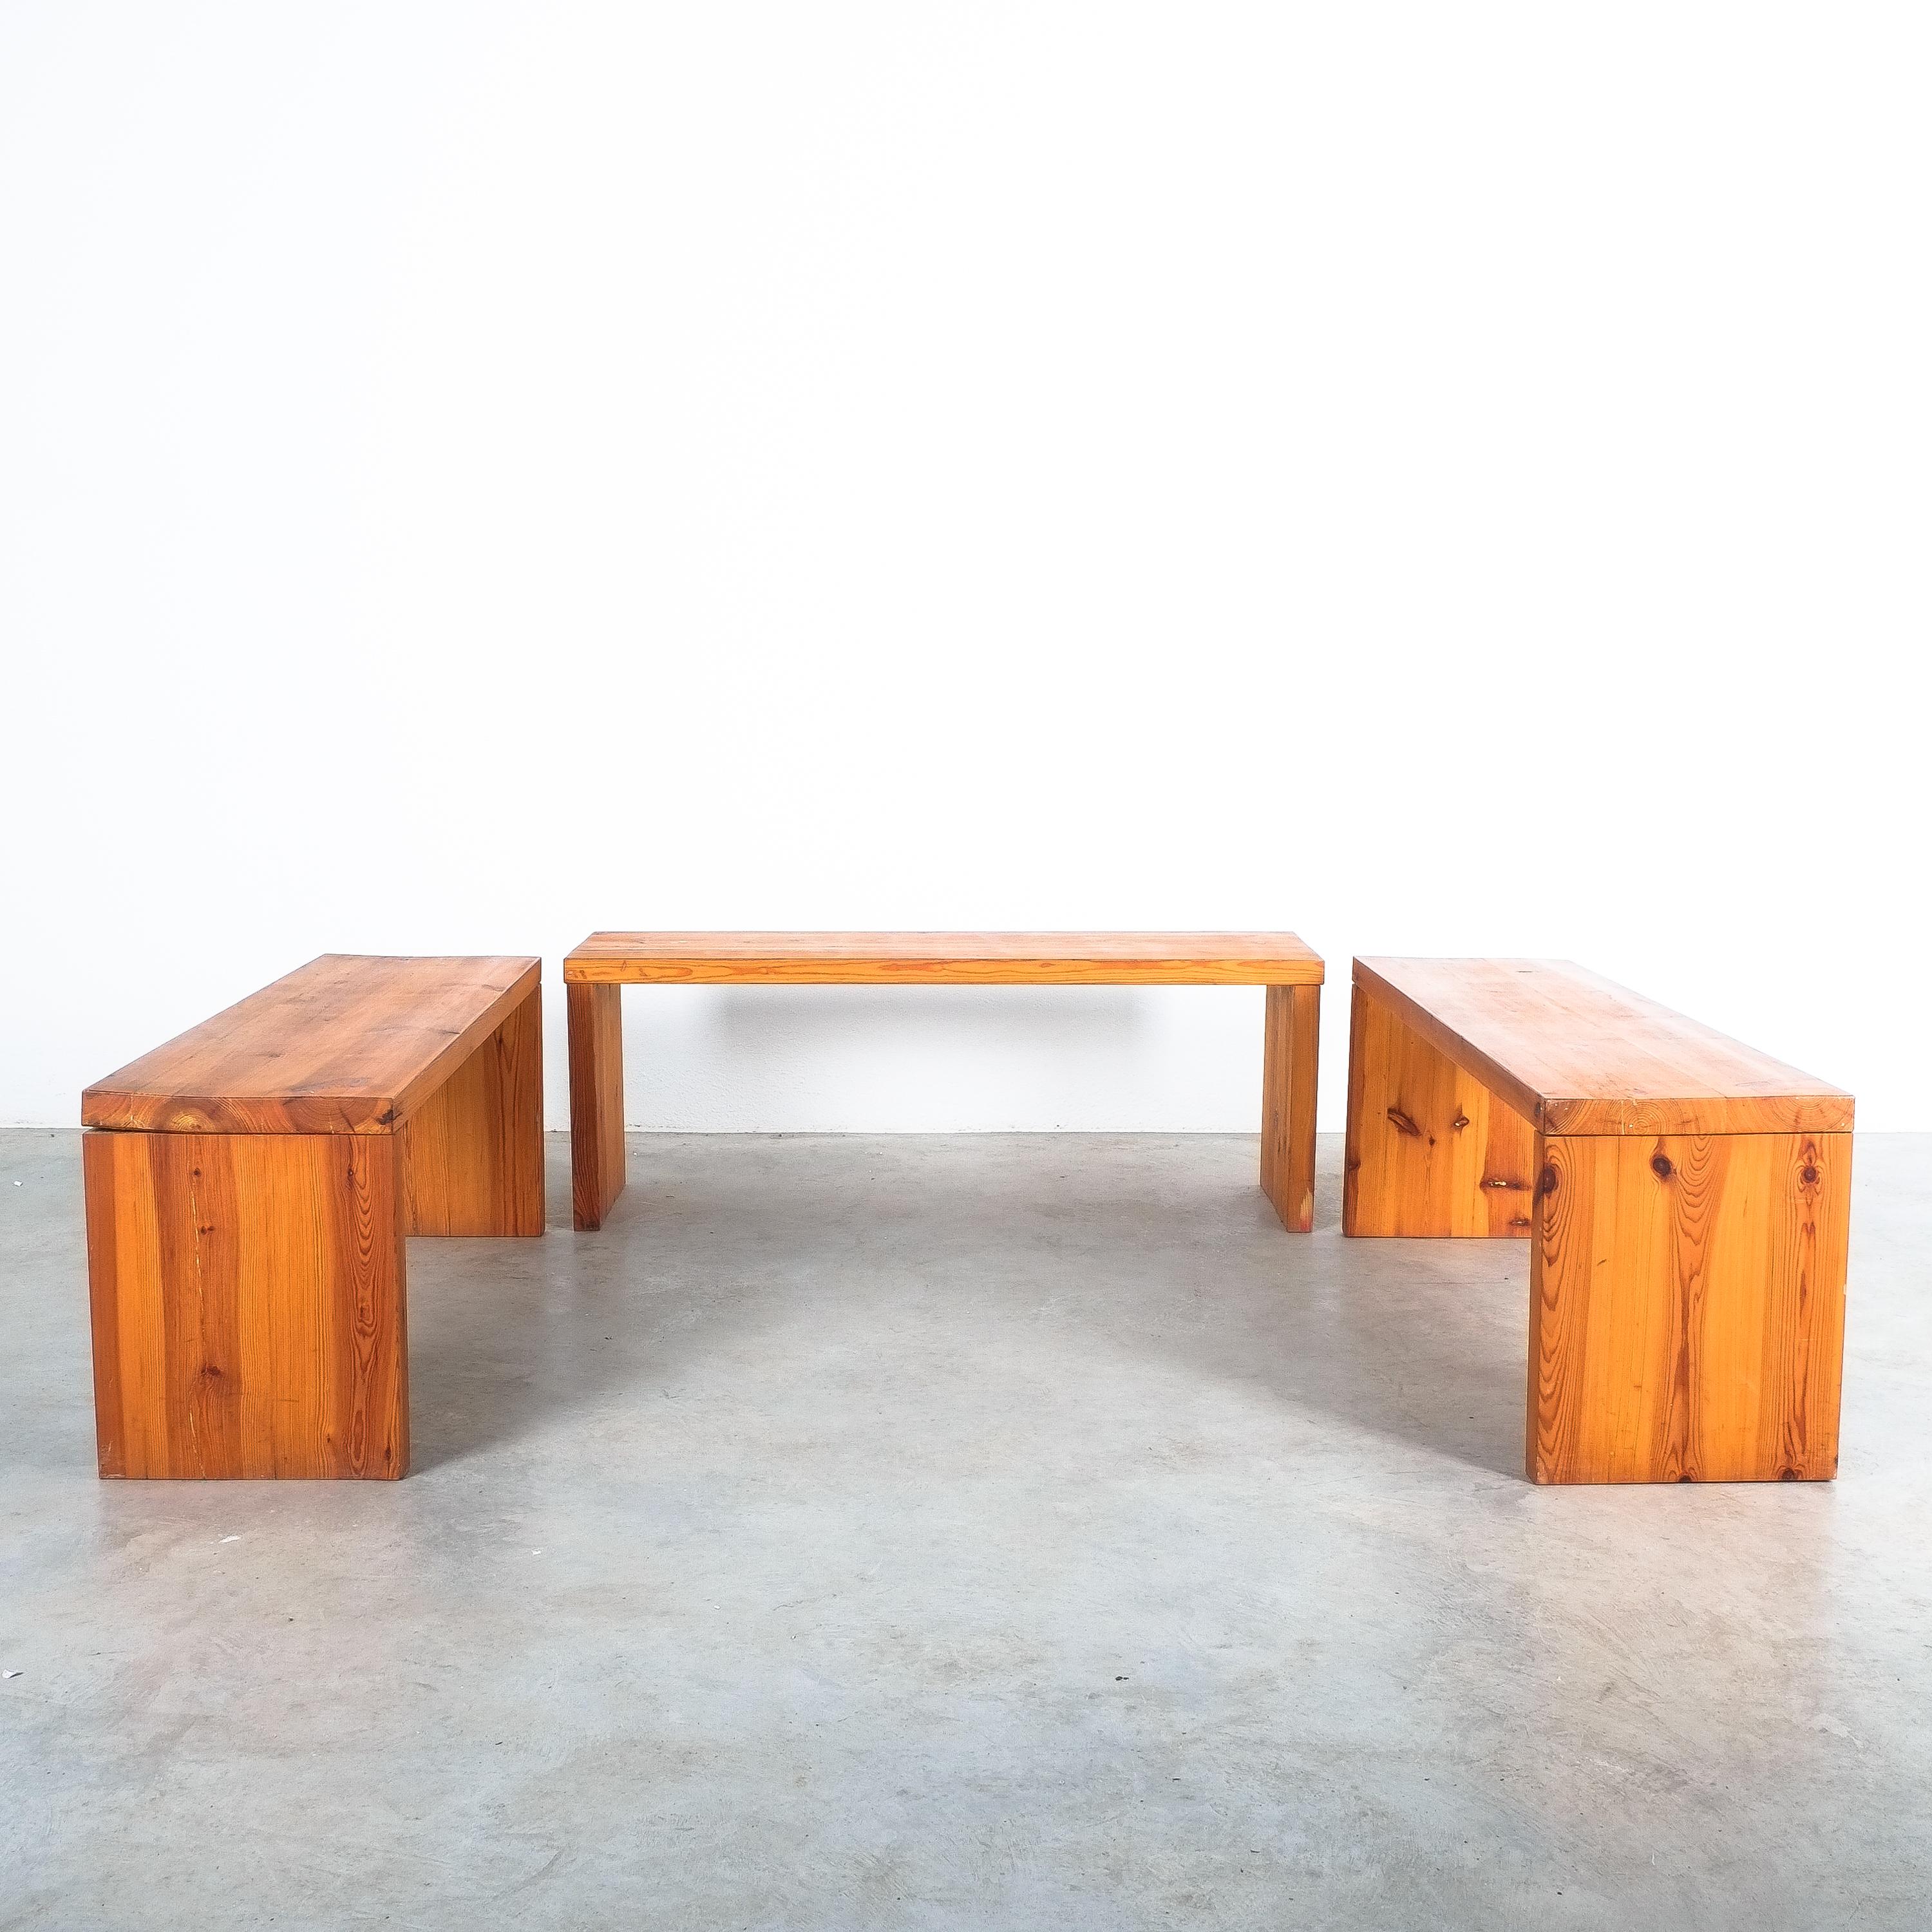 Raffaello Biagetti benches from fir wood 47.24